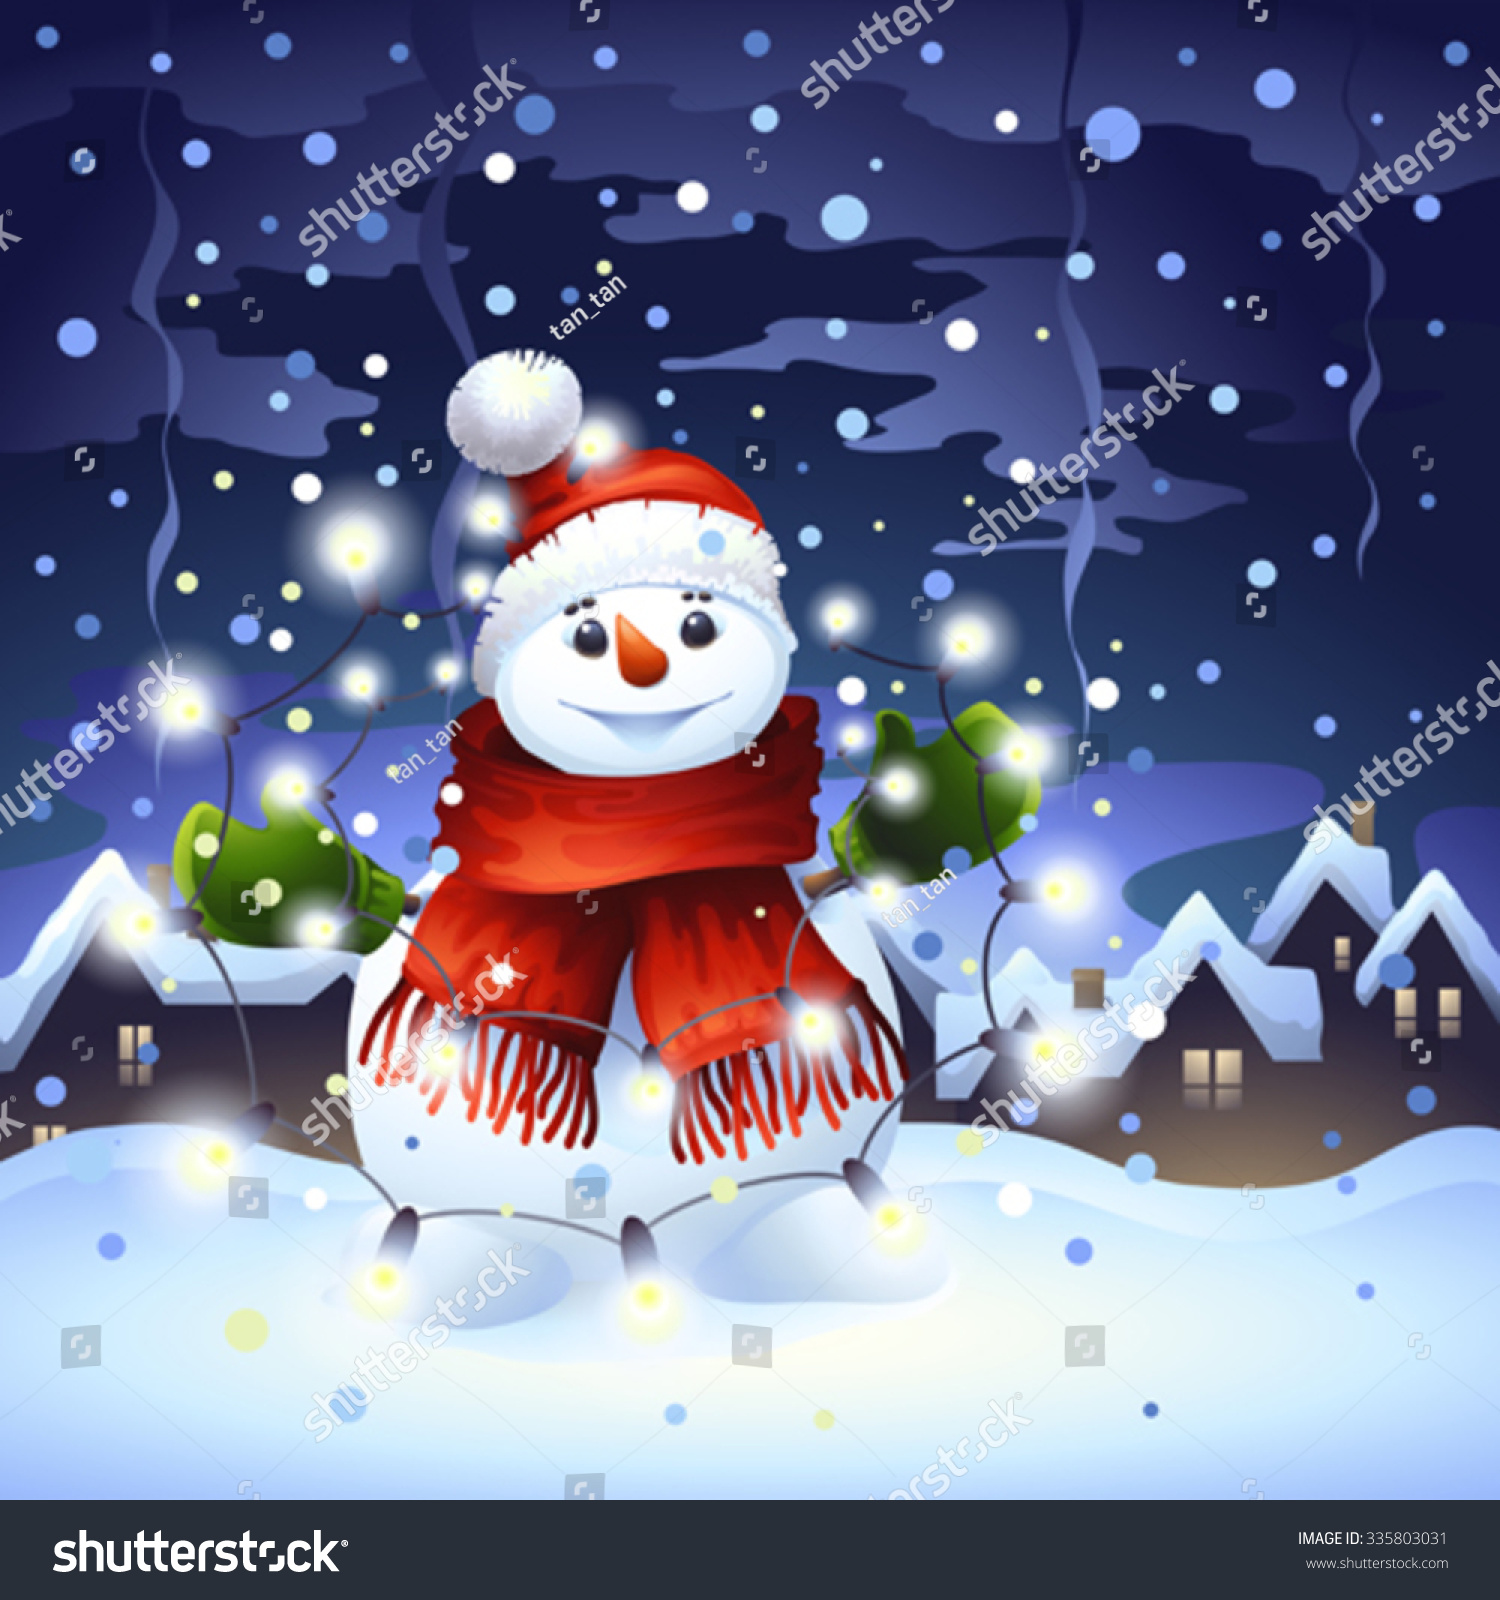 snowman with garland